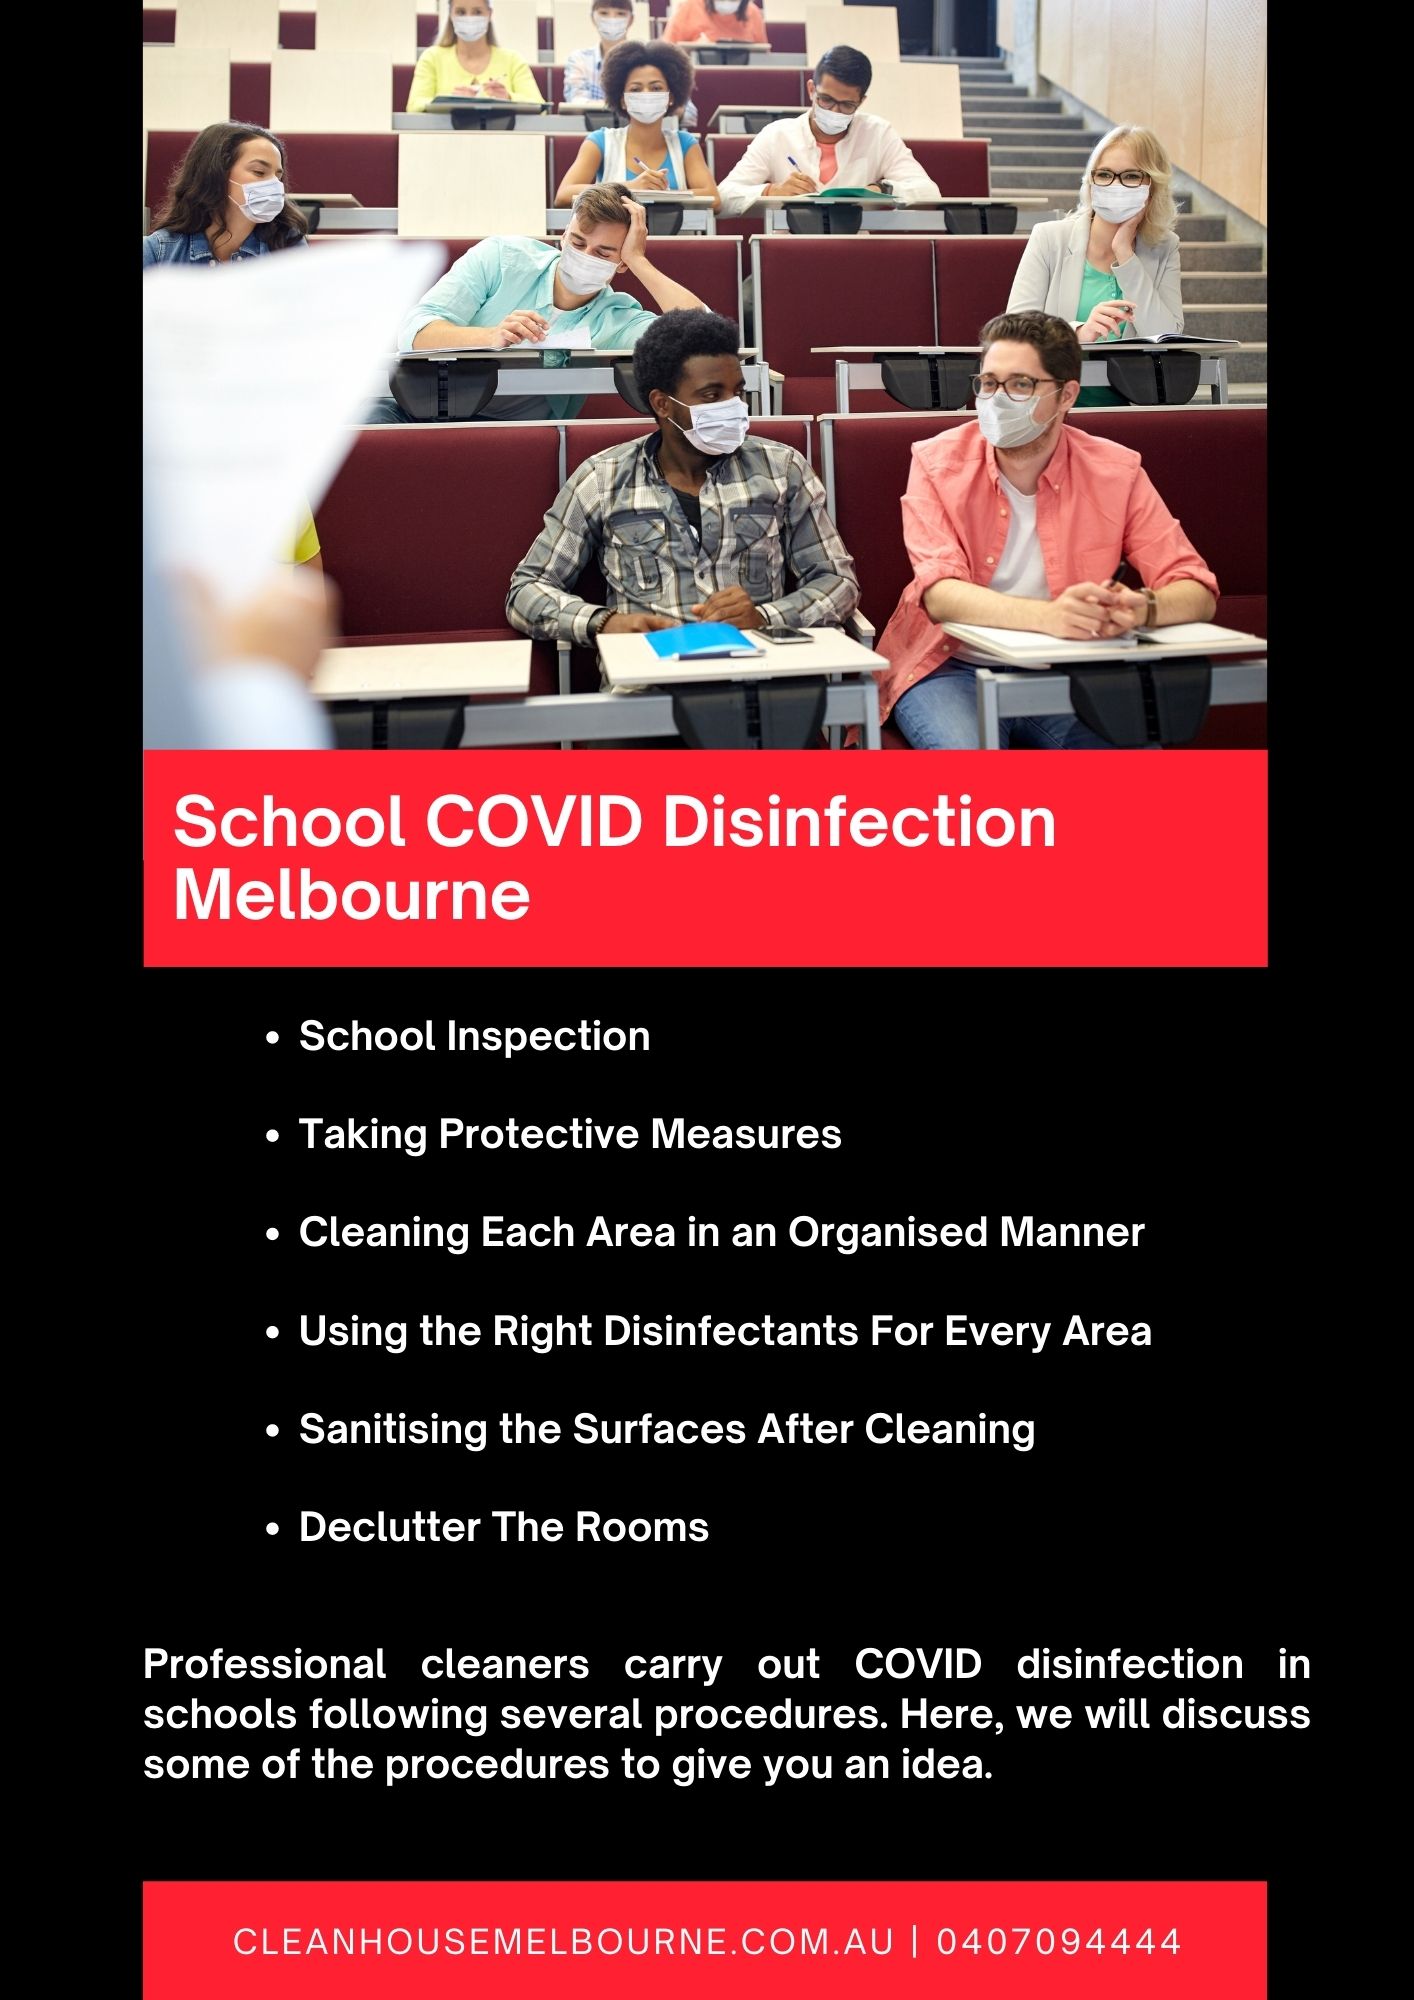 School COVID Disinfection Melbourne